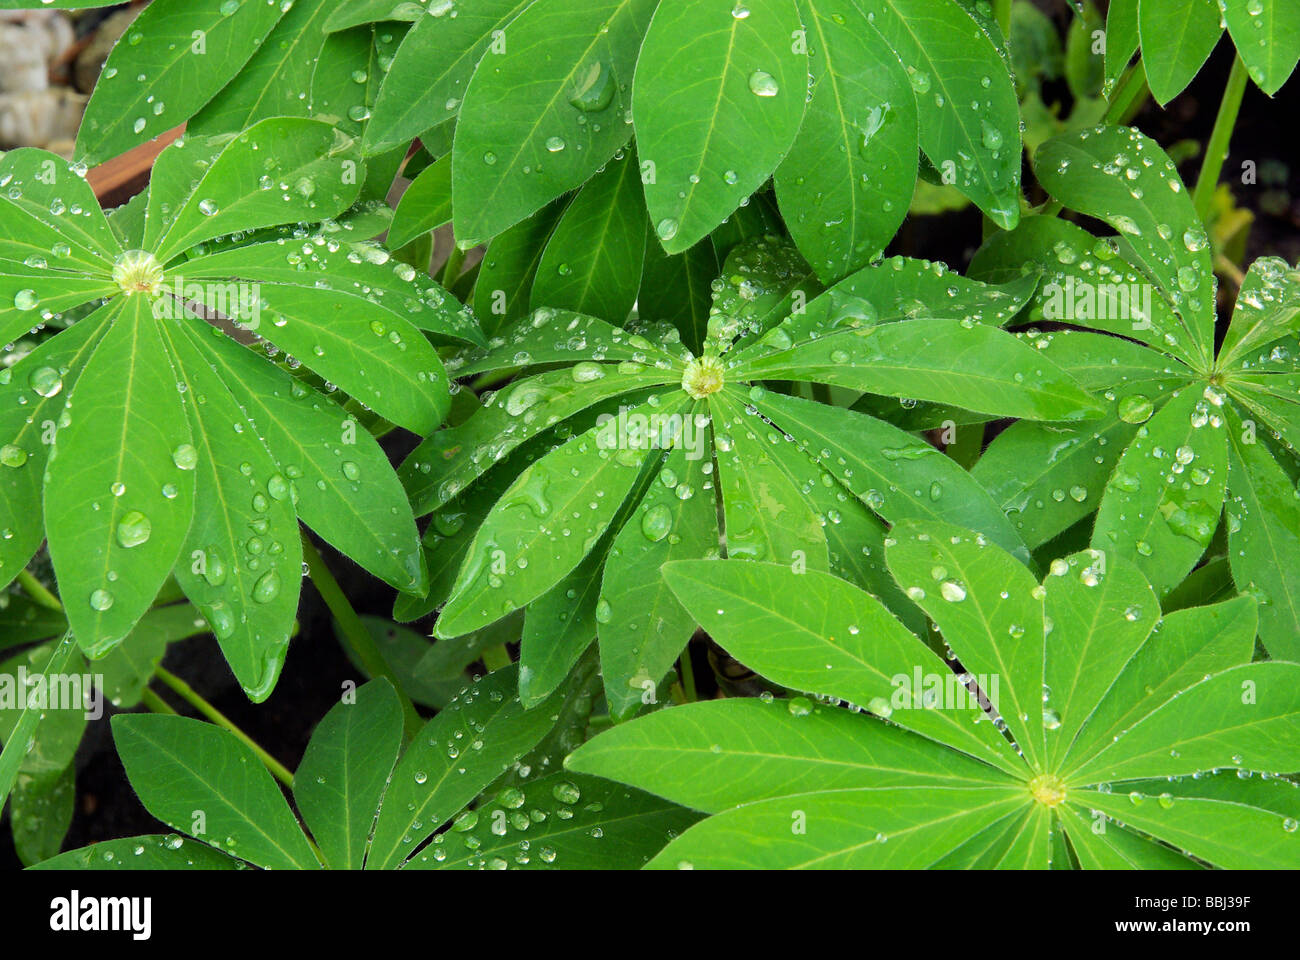 Lupine Blatt lupin leaf 03 Stock Photo